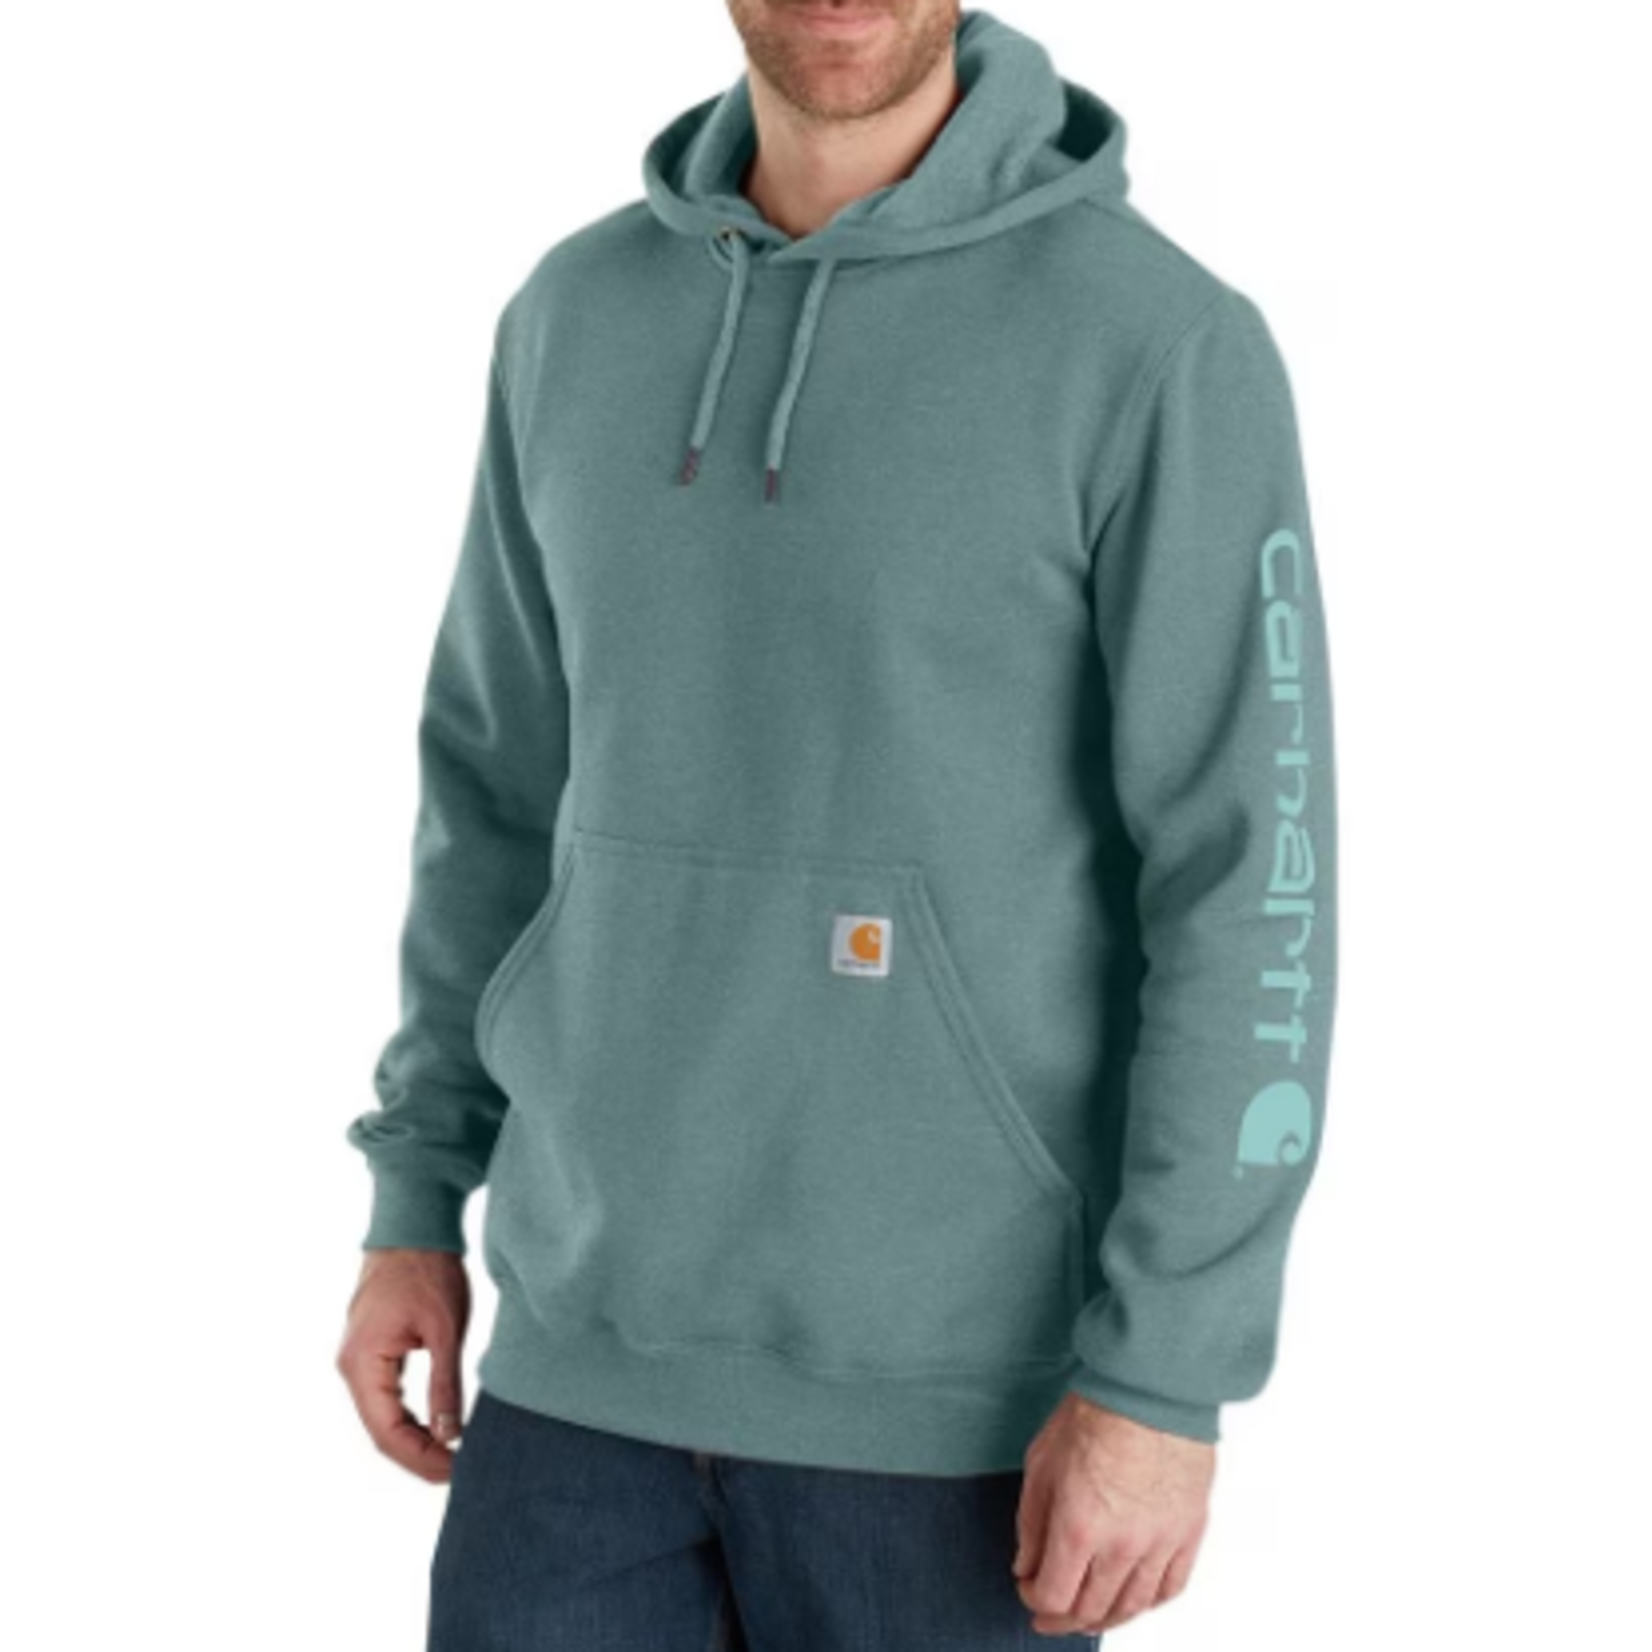 Carhartt K288 Carhartt Classic Men's/Unisex  Hooded Sweatshirt